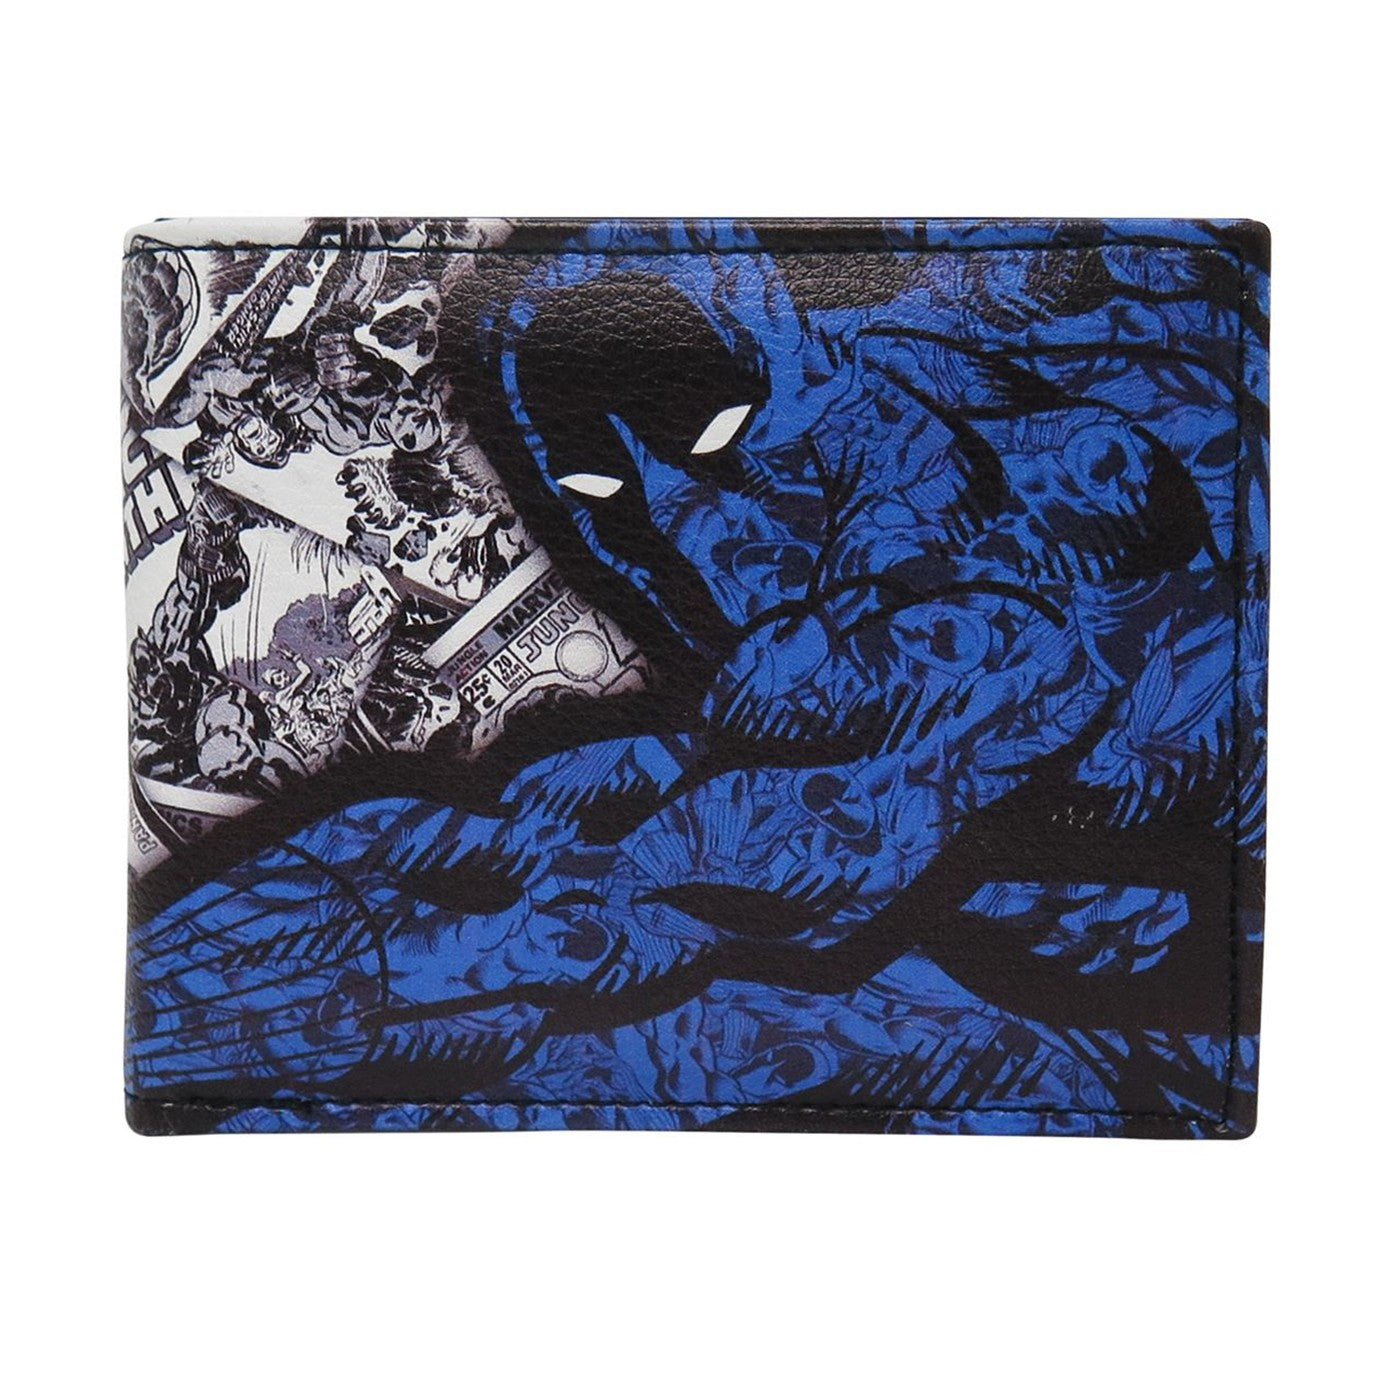 title:Black Panther Classic Men's Bi-Fold Wallet;color:Black